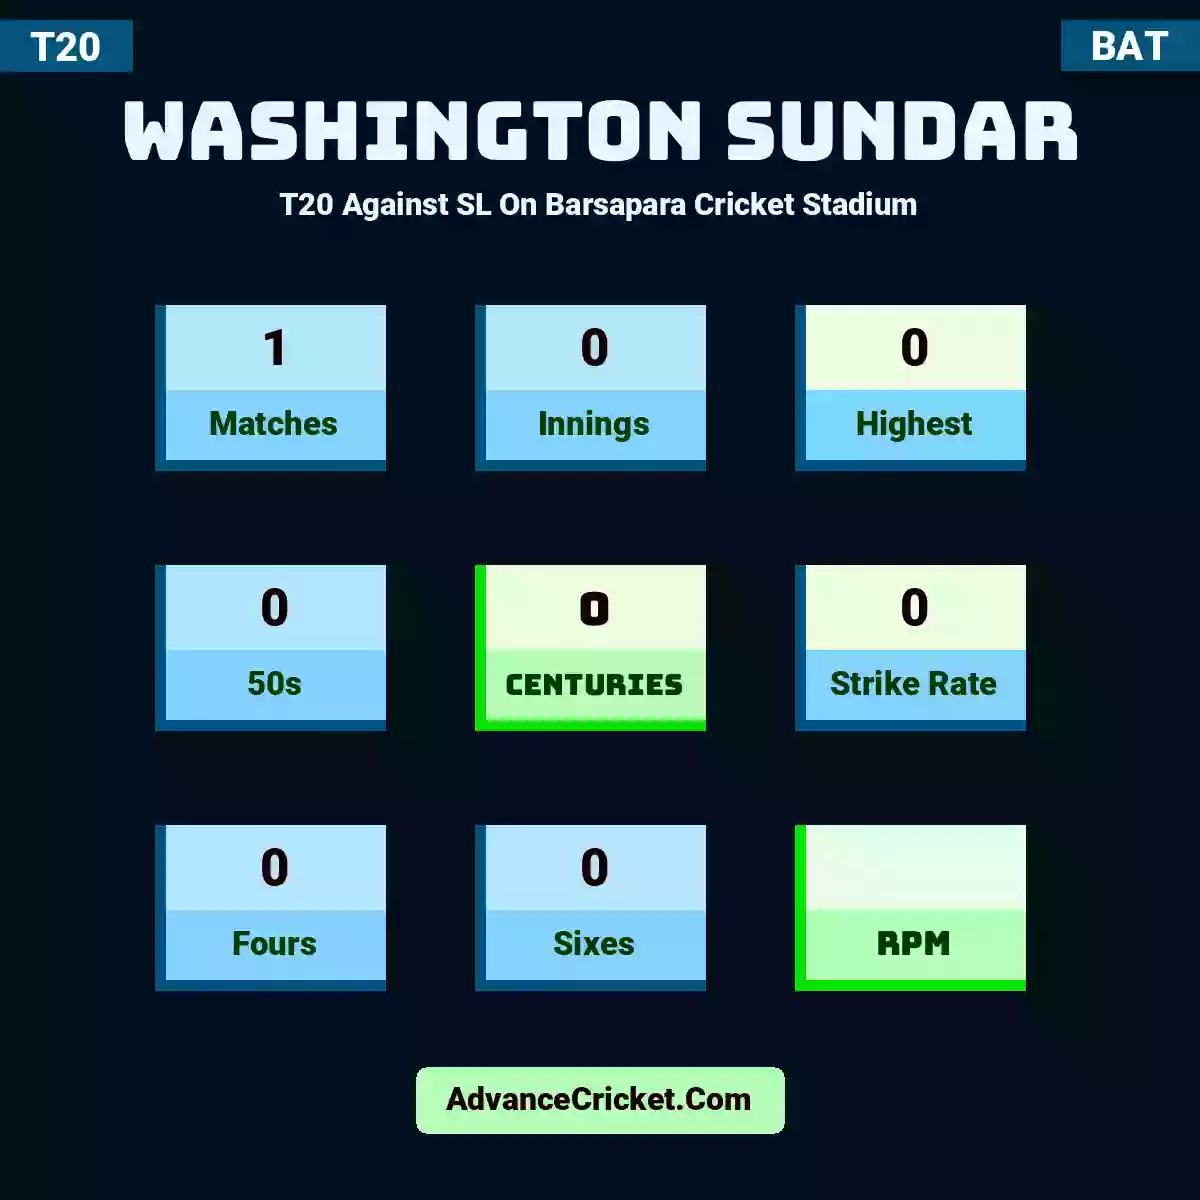 Washington Sundar T20  Against SL On Barsapara Cricket Stadium, Washington Sundar played 1 matches, scored 0 runs as highest, 0 half-centuries, and 0 centuries, with a strike rate of 0. W.Sundar hit 0 fours and 0 sixes.